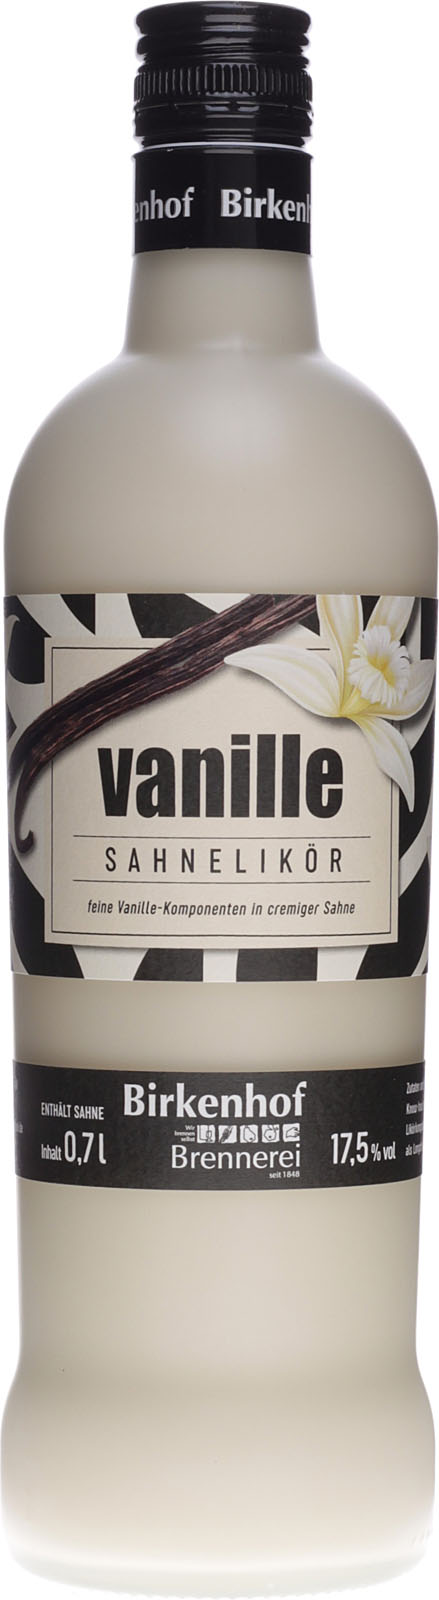 Birkenhof Vanille-Sahne Likör 0,7 Liter 17,5 % Vol.